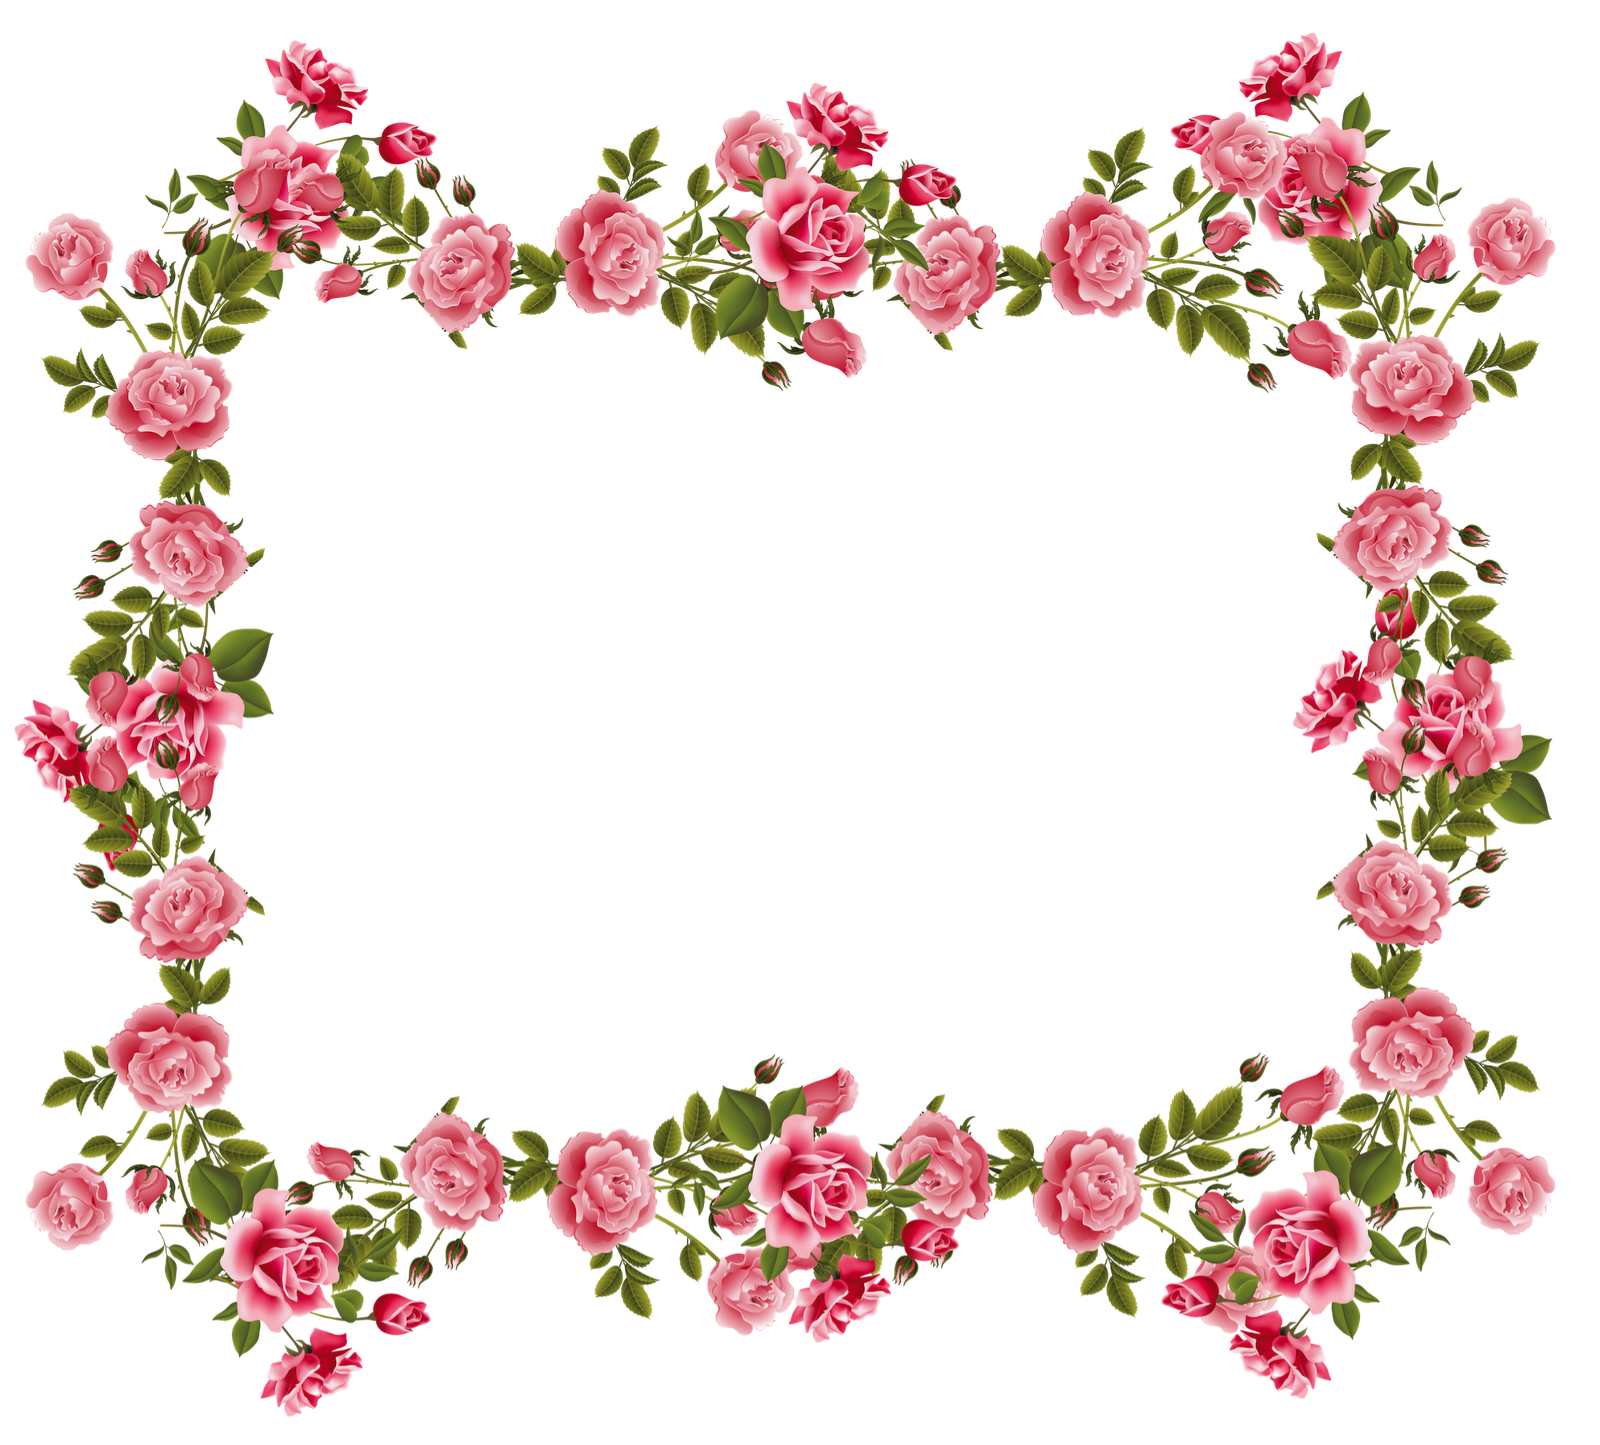 Download PNG image - Romantic Pink Flower Border PNG Image 